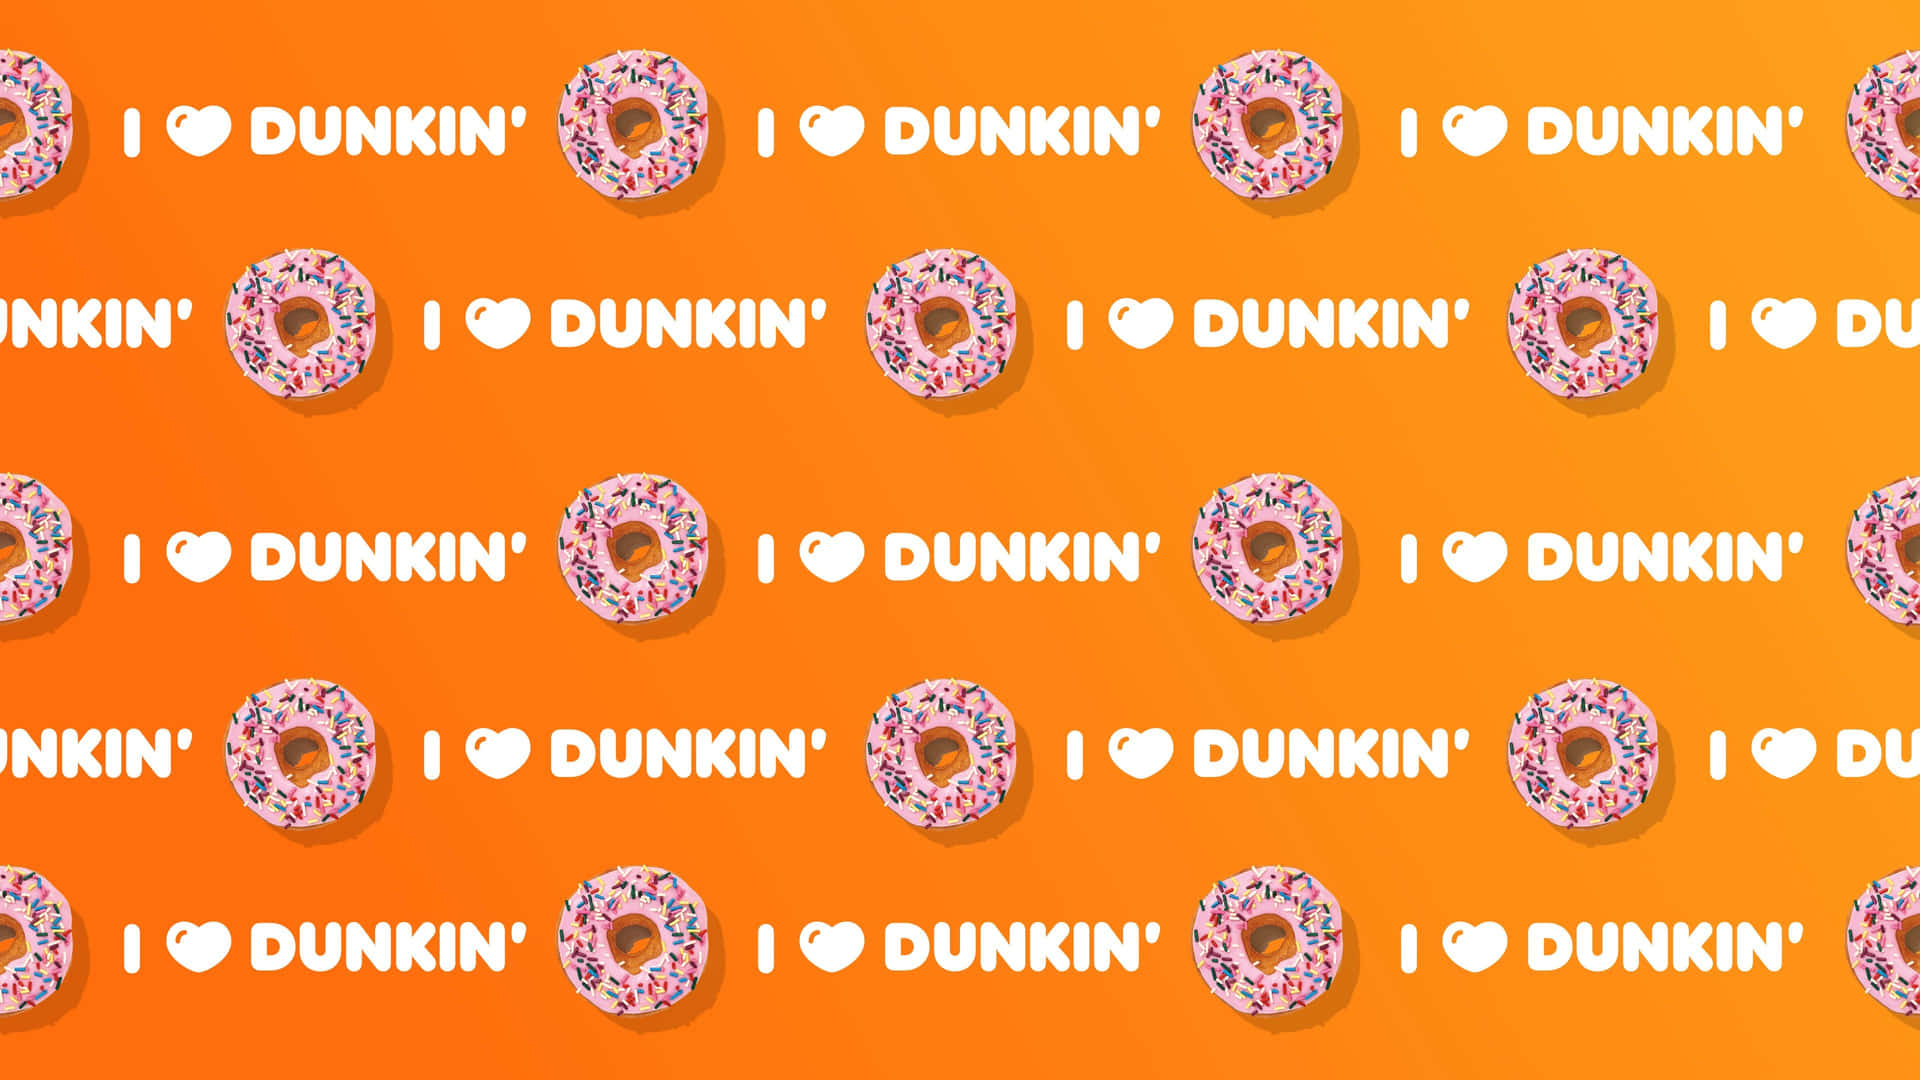 Perfektionin Jeder Tasse Bei Dunkin Donuts.